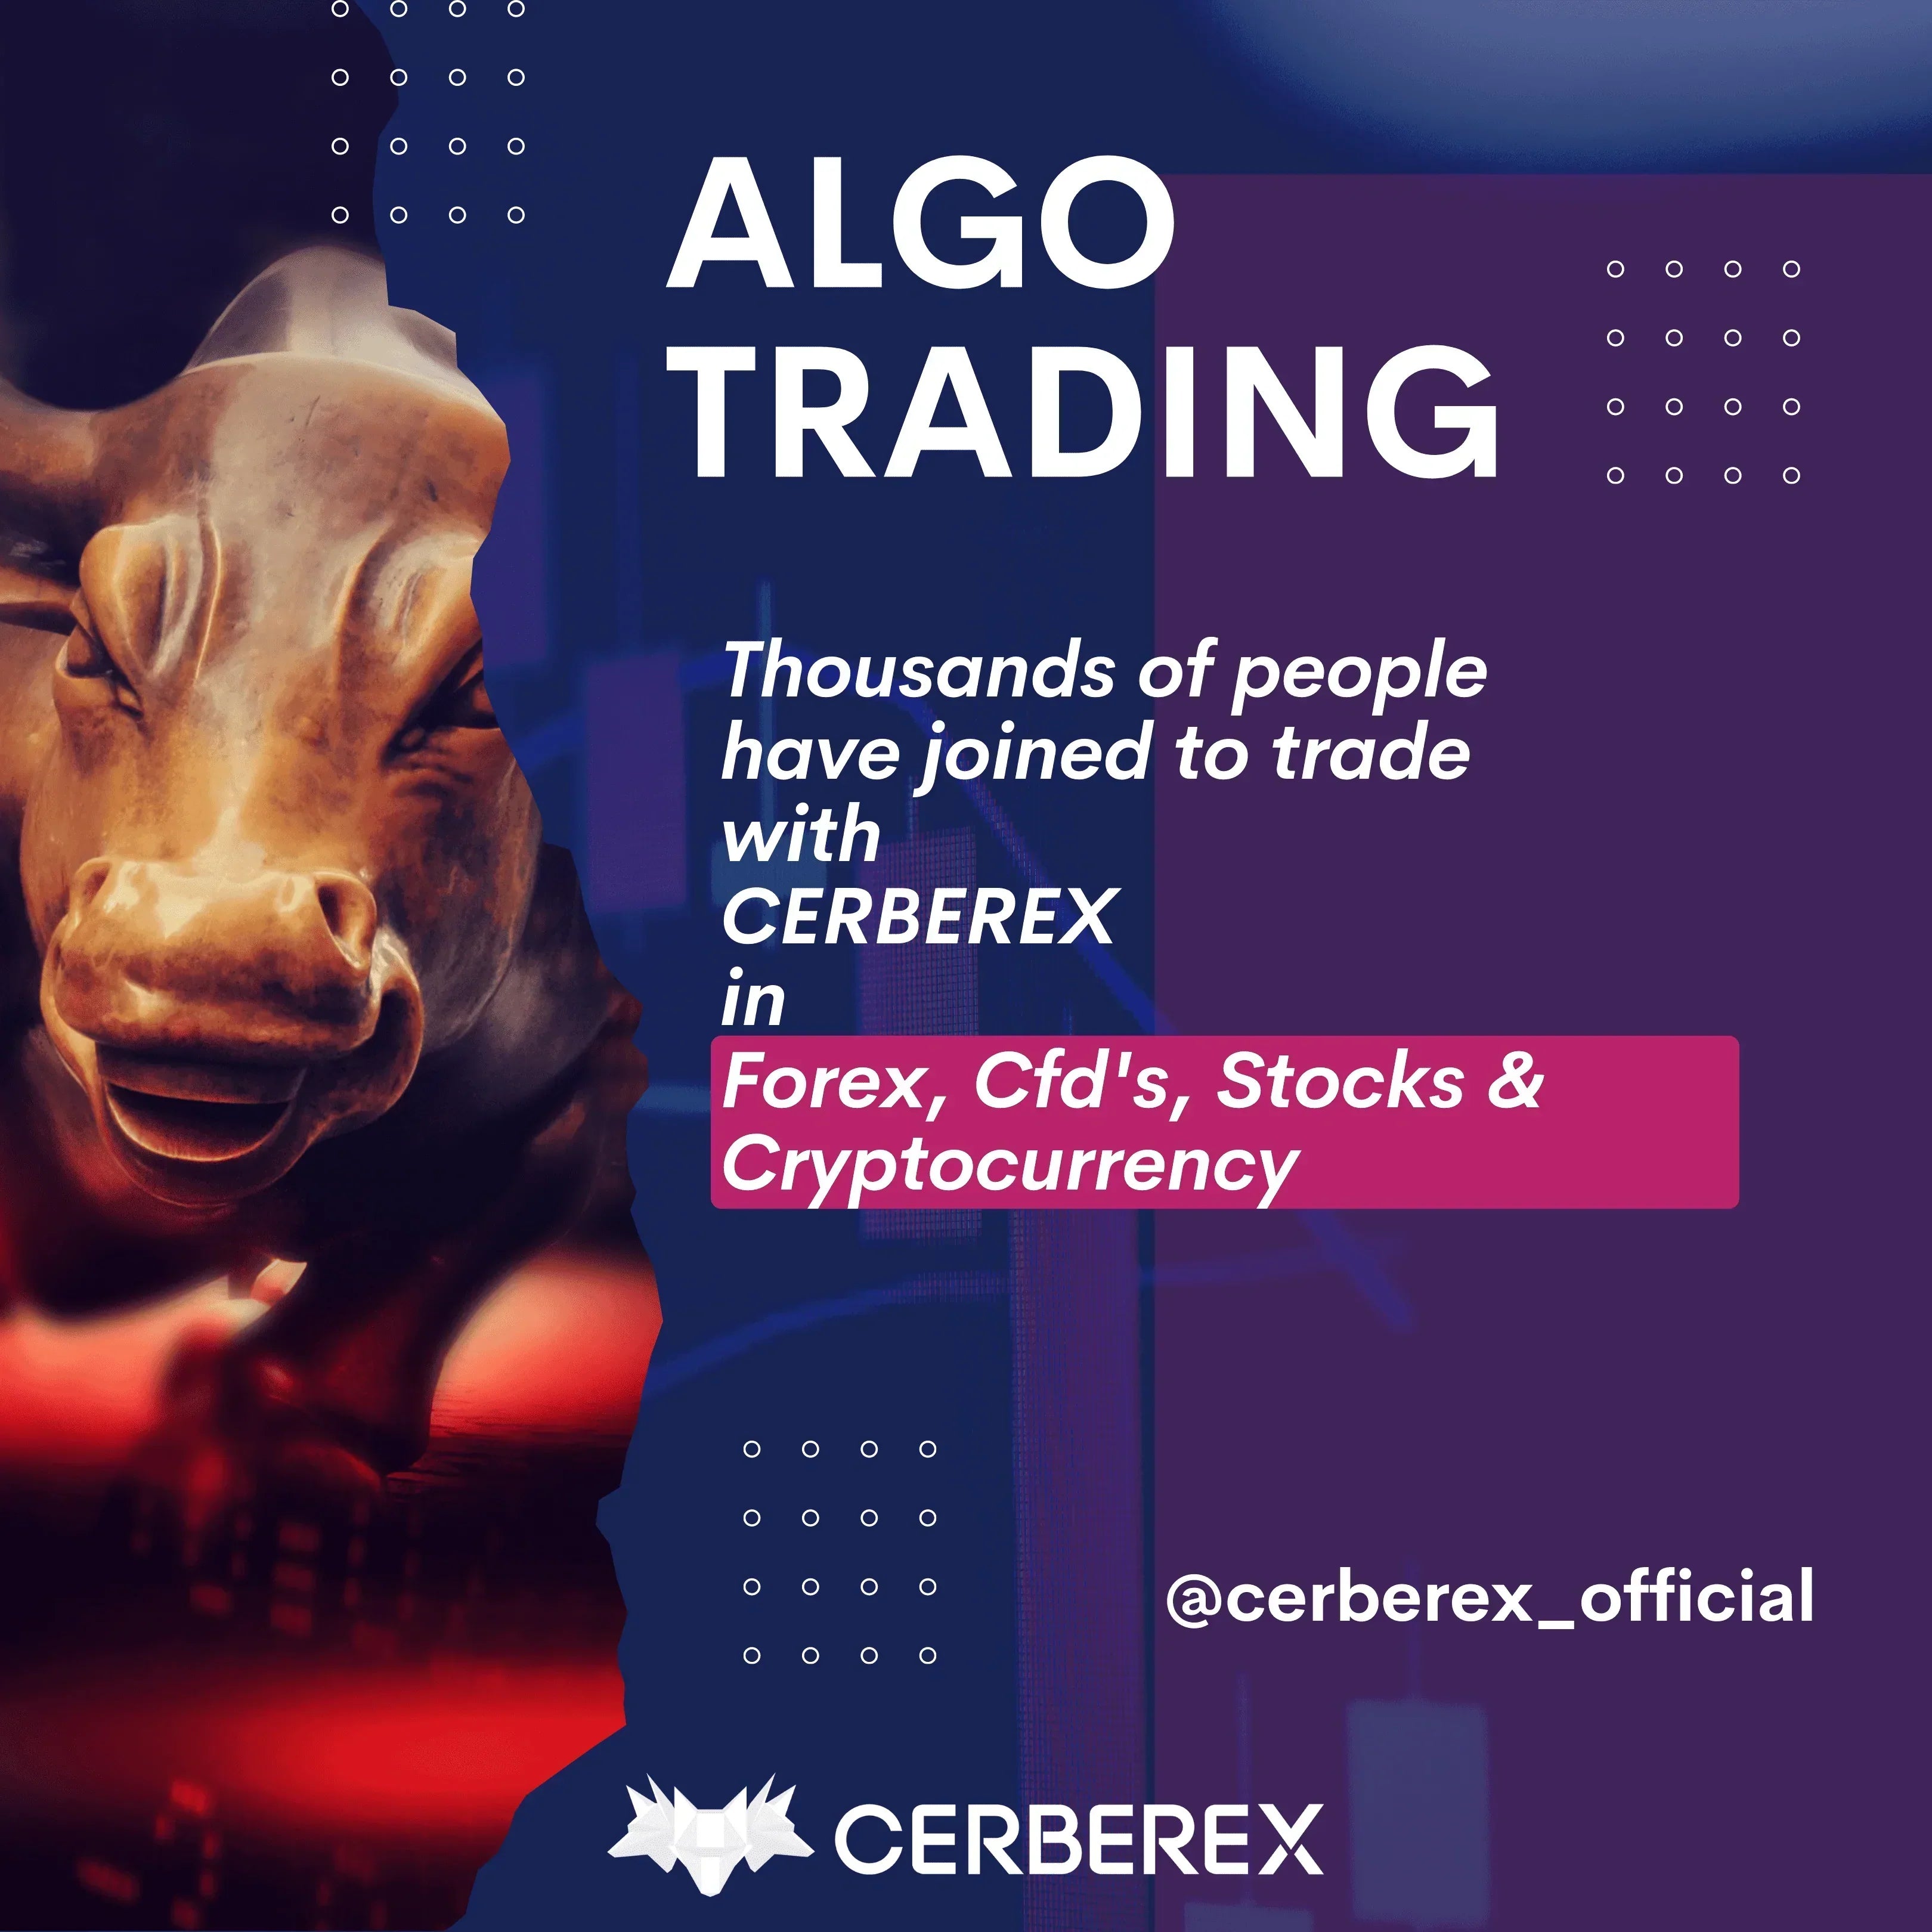 Cerberex Algo Trading US$100K Recovery Plan - Cerberex 